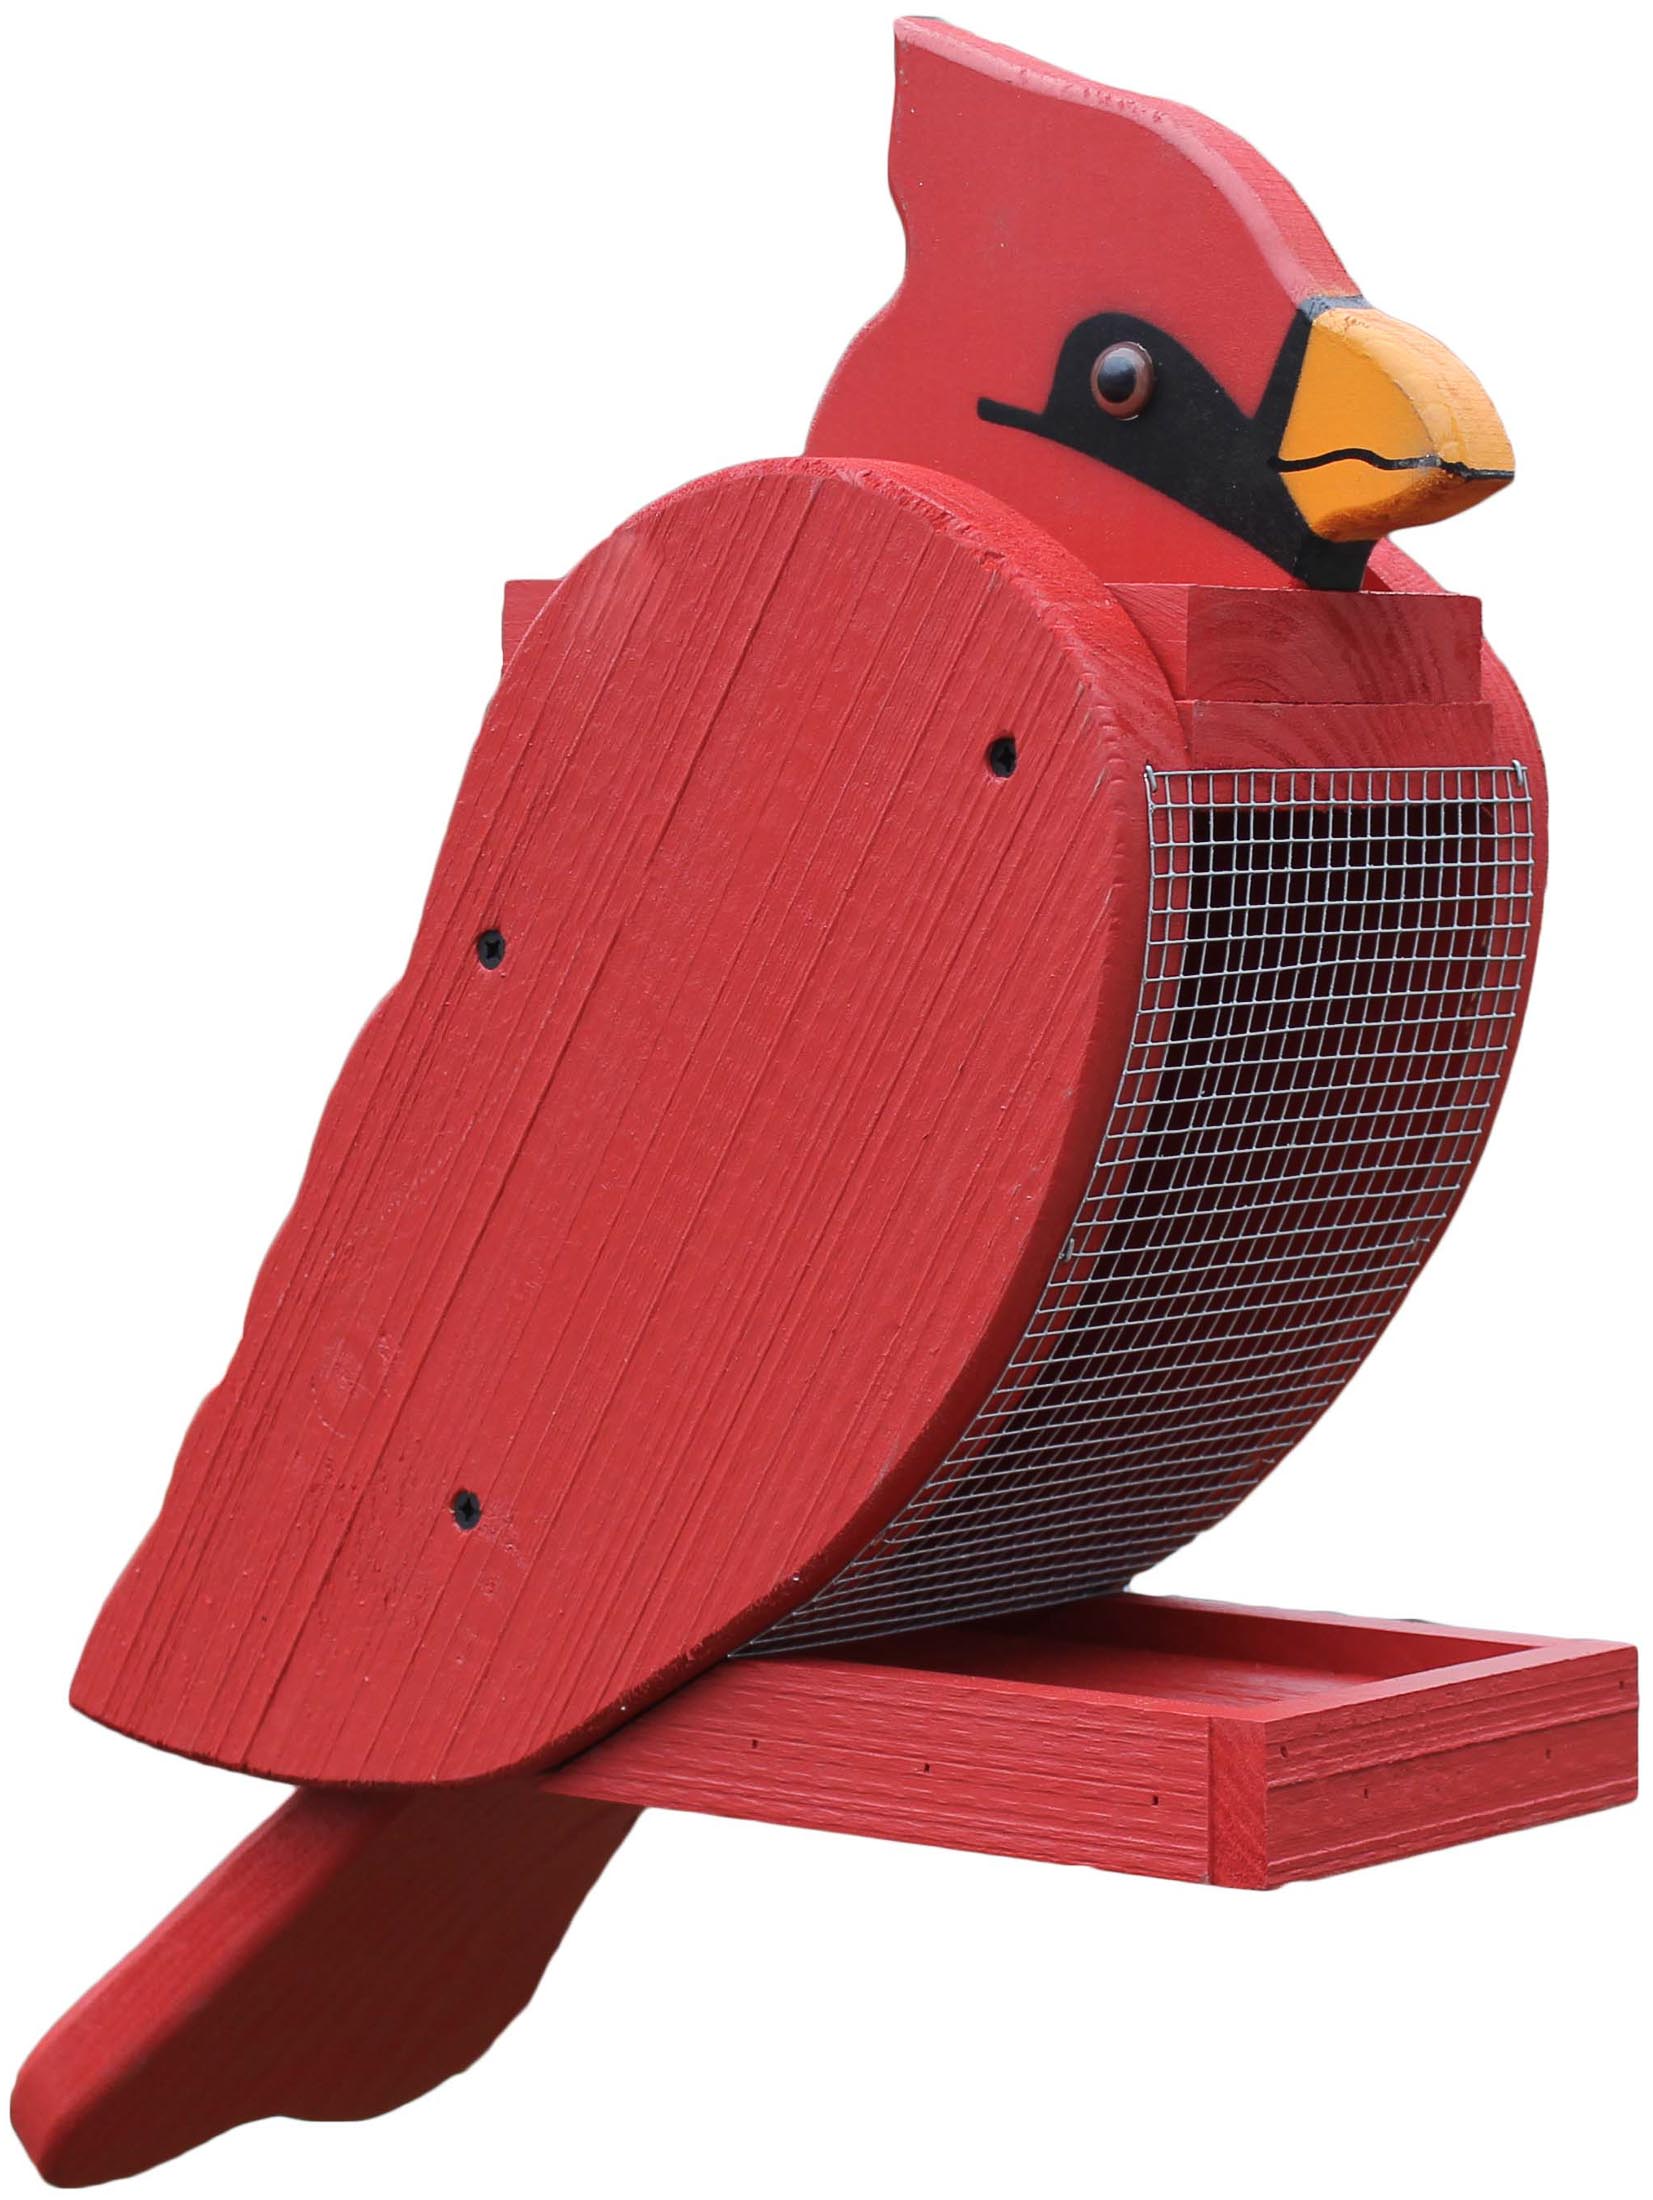 Cardinal Bird Feeder